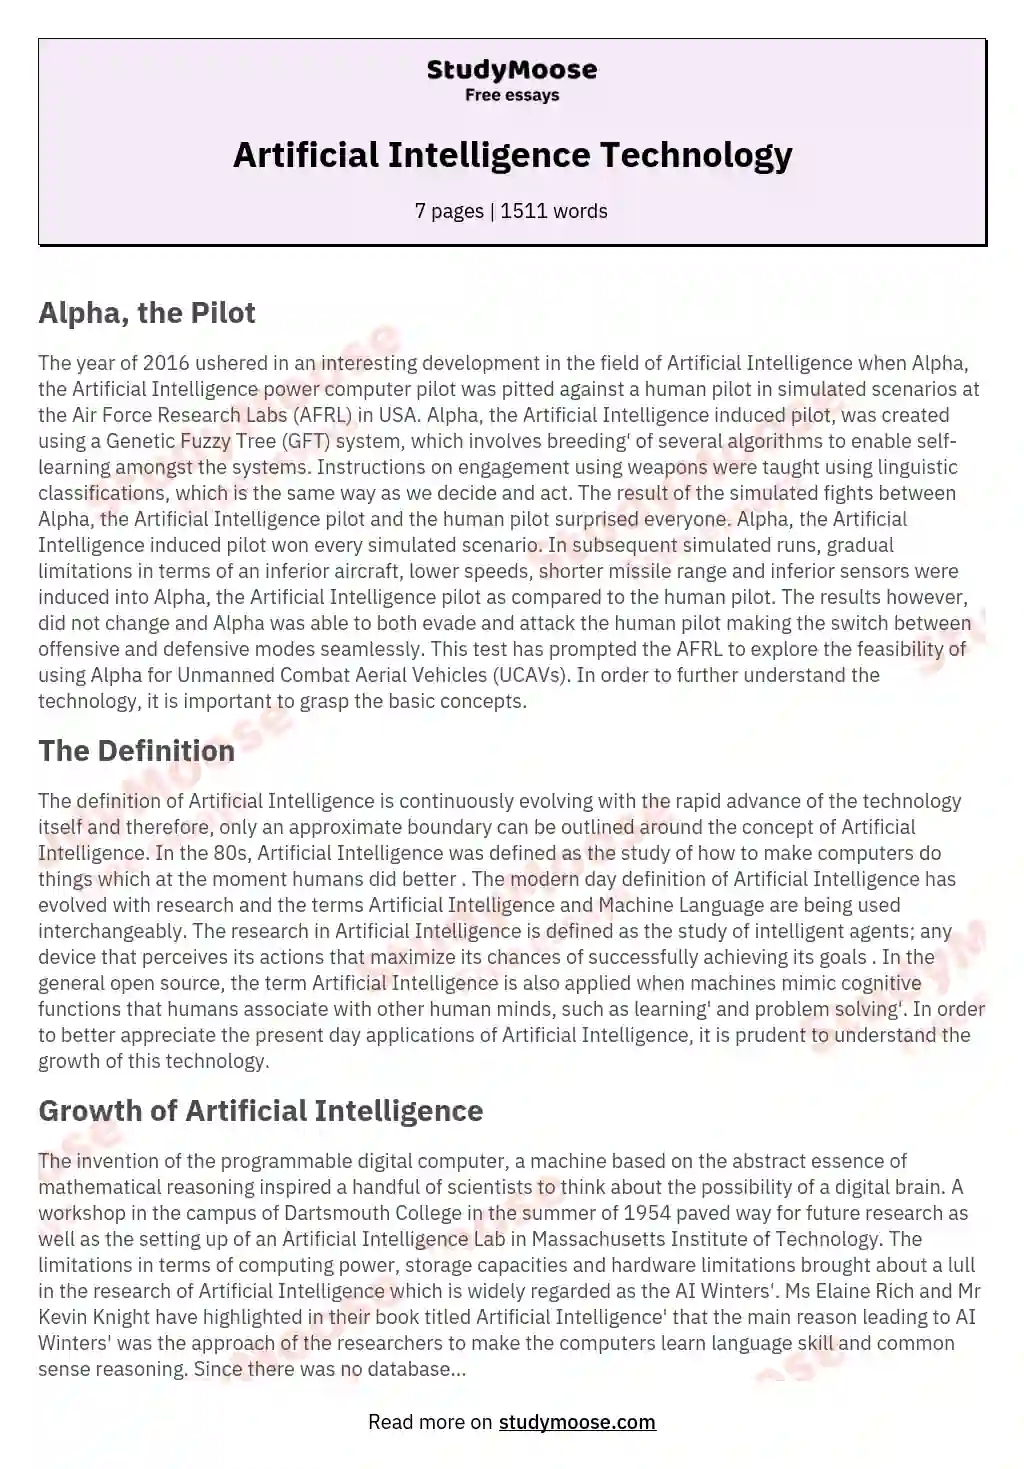 Artificial Intelligence Technology essay